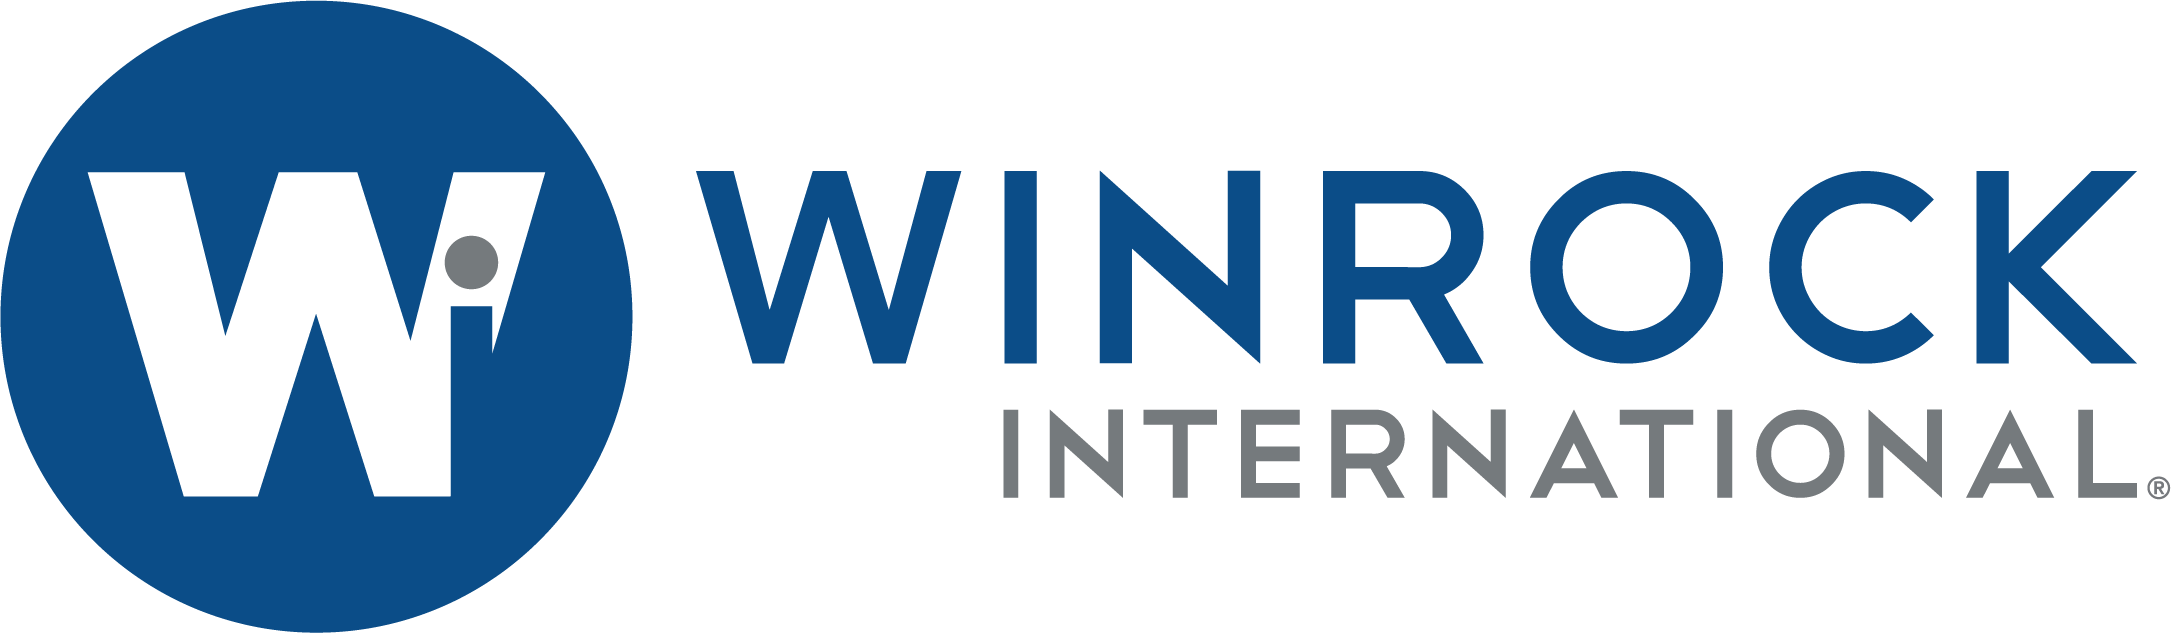 Winrock-logo-R.png